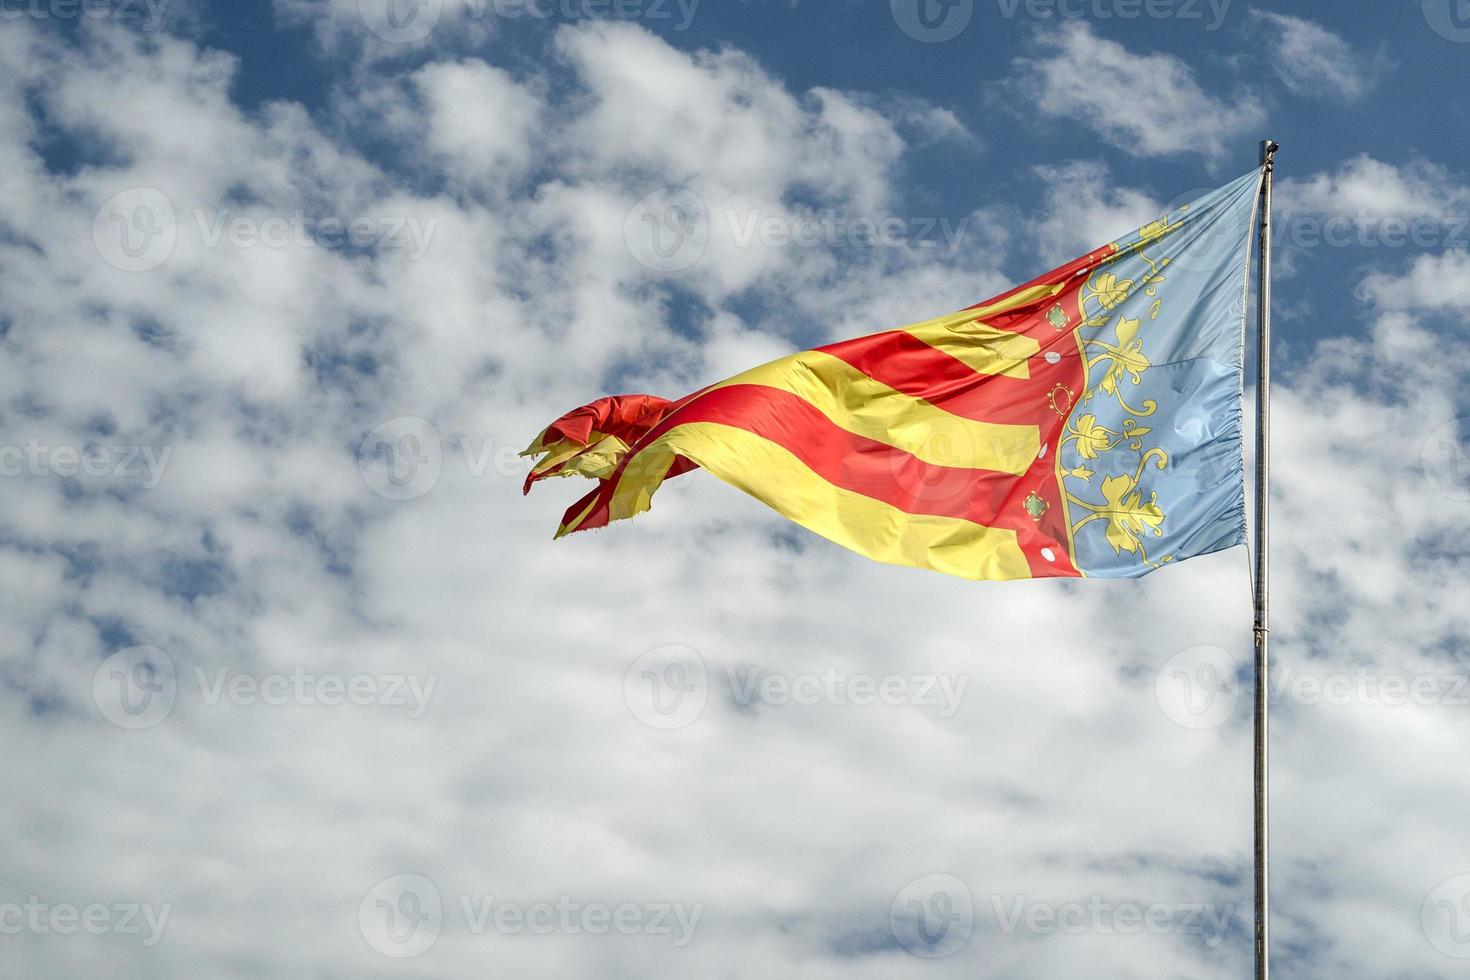 schwenkende valencia-flagge in den blauen himmel foto